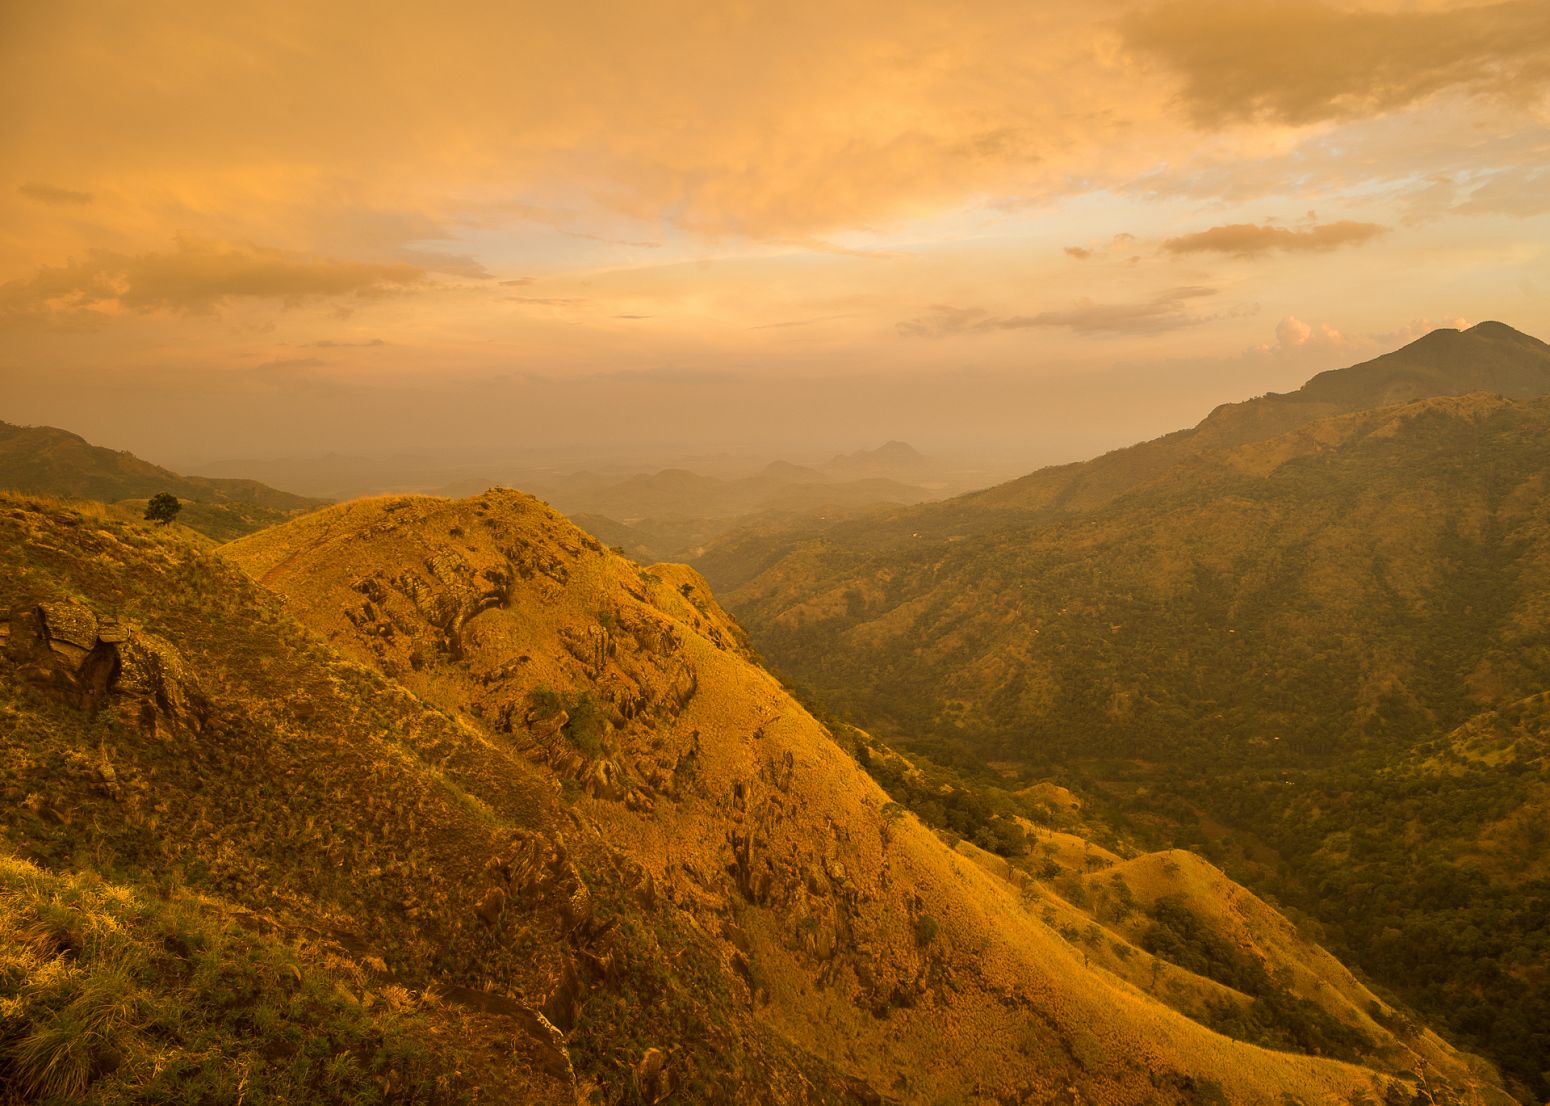 Sunset from Little Adam's Peak, Ella, Sri Lanka